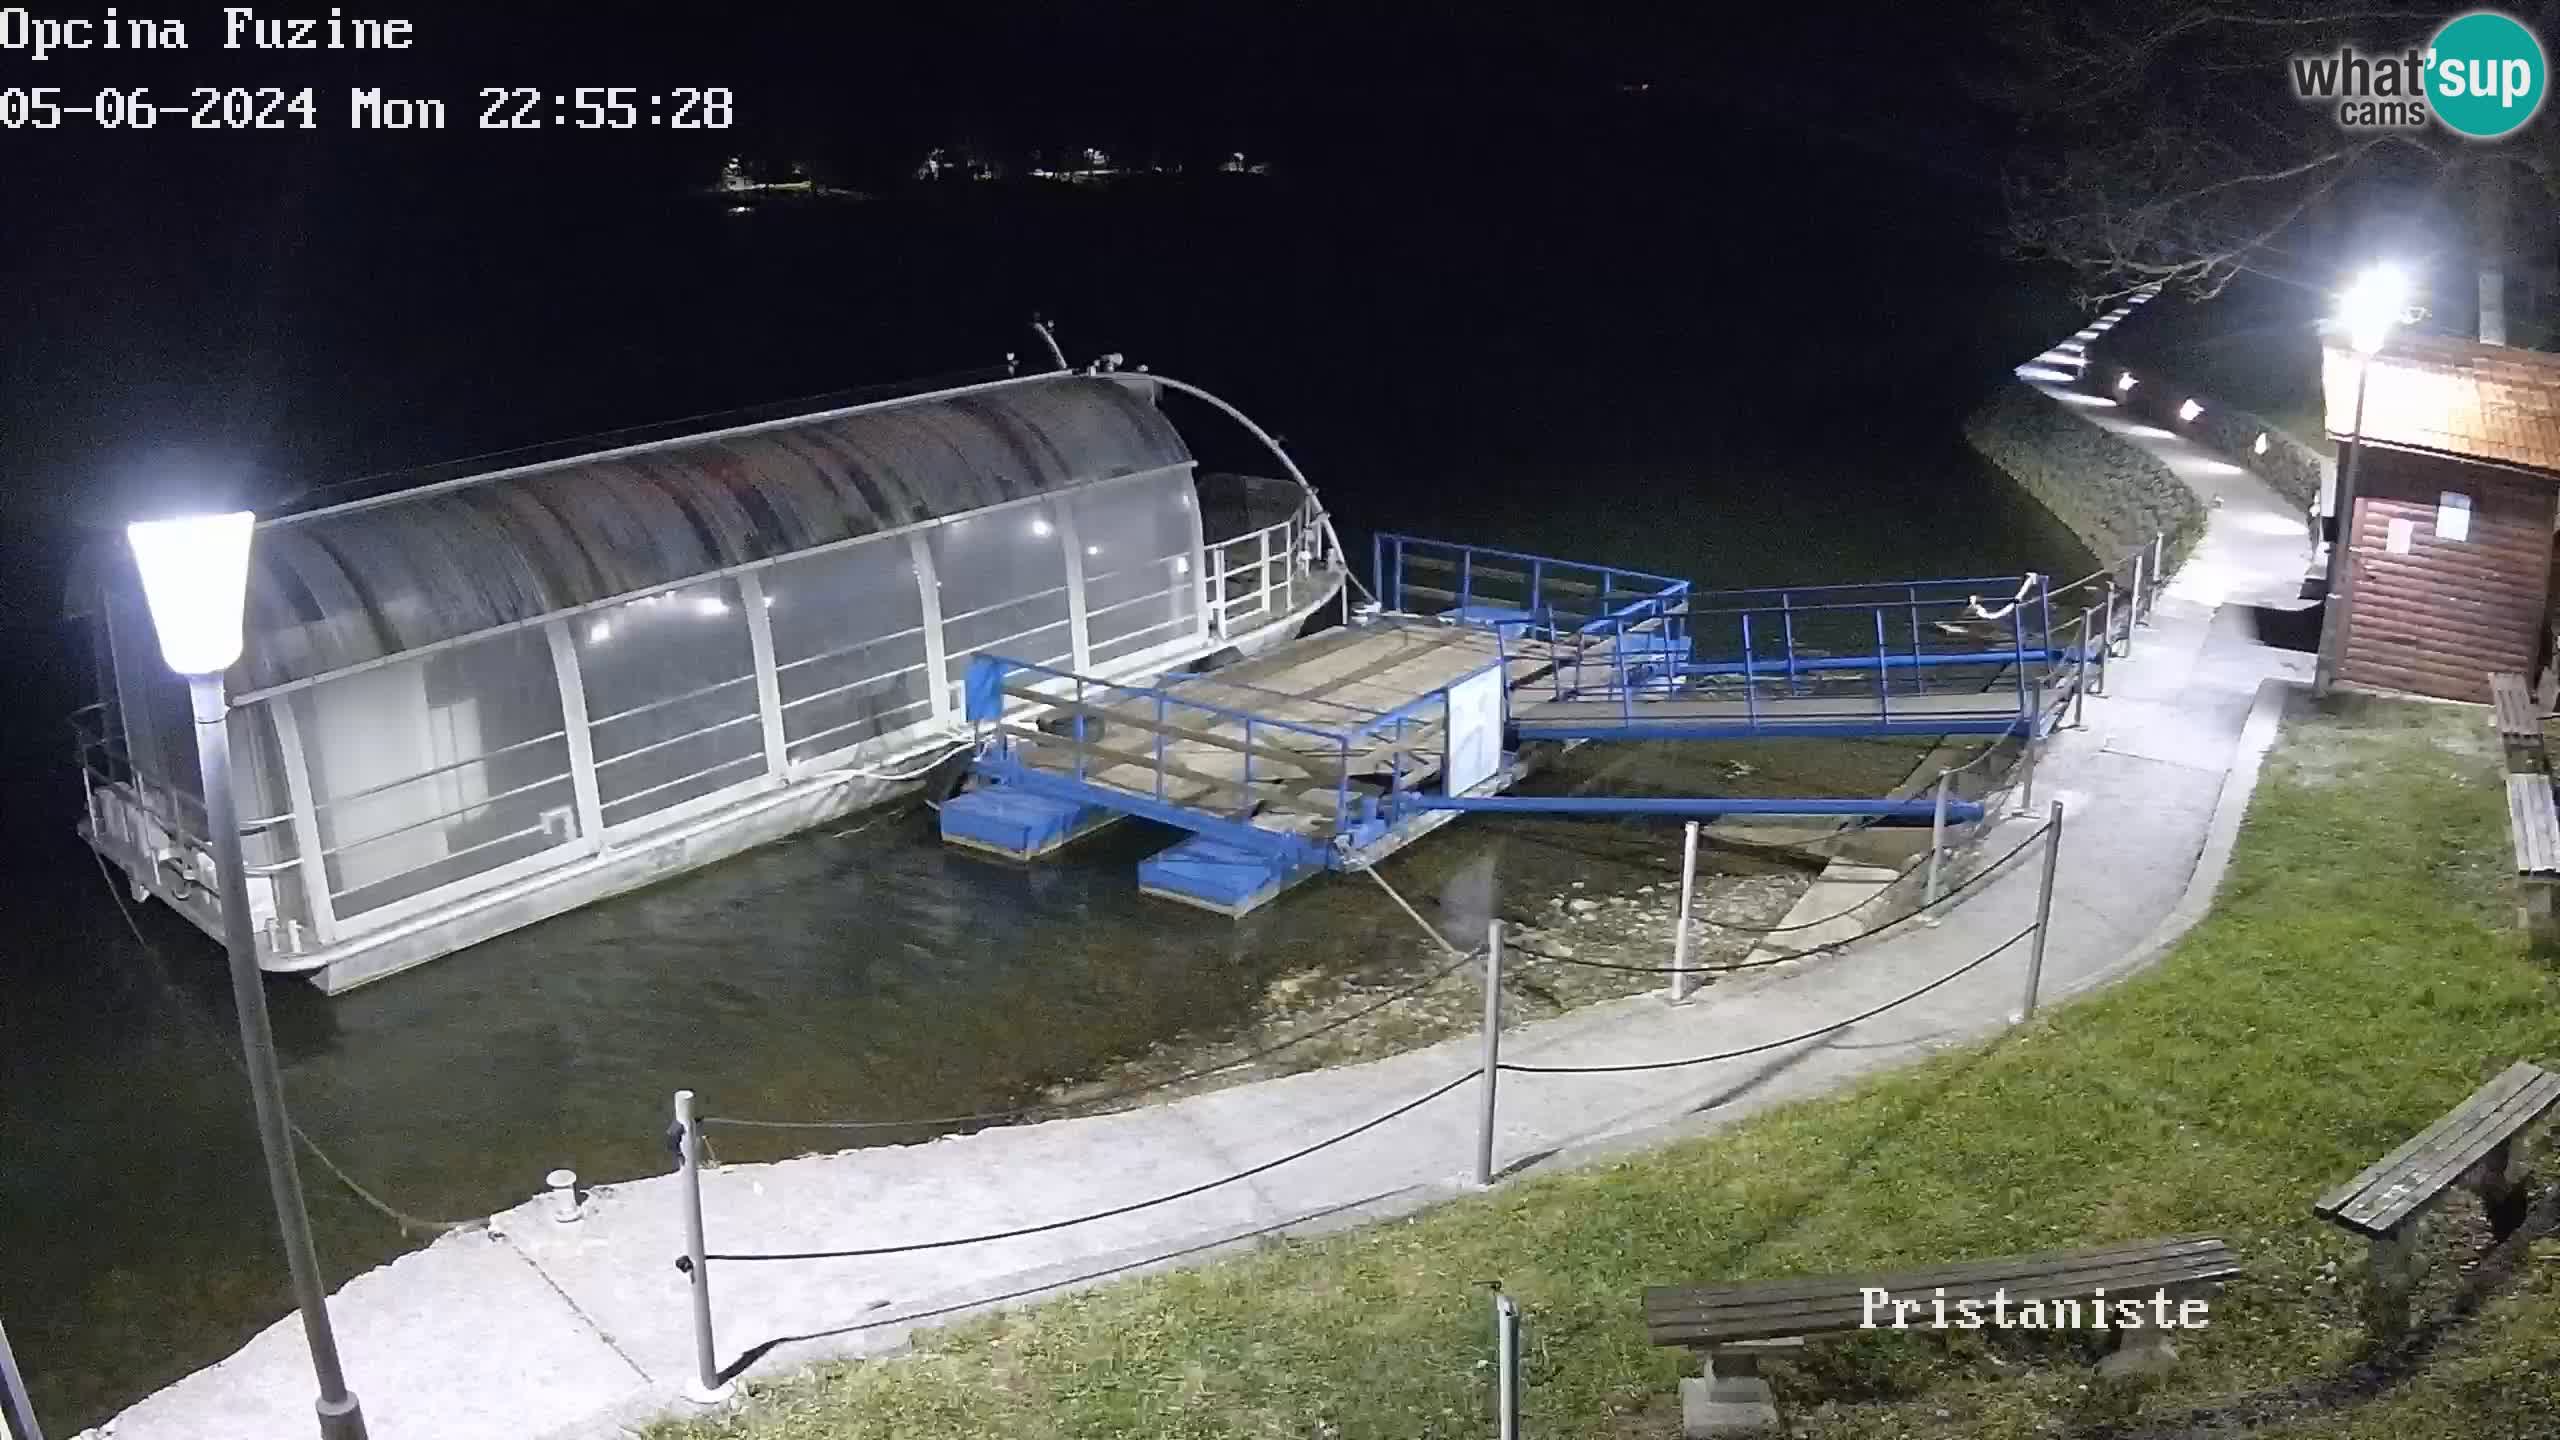 Lago Bajer camera en vivo Bajersko Jezero Fužine barco turístico